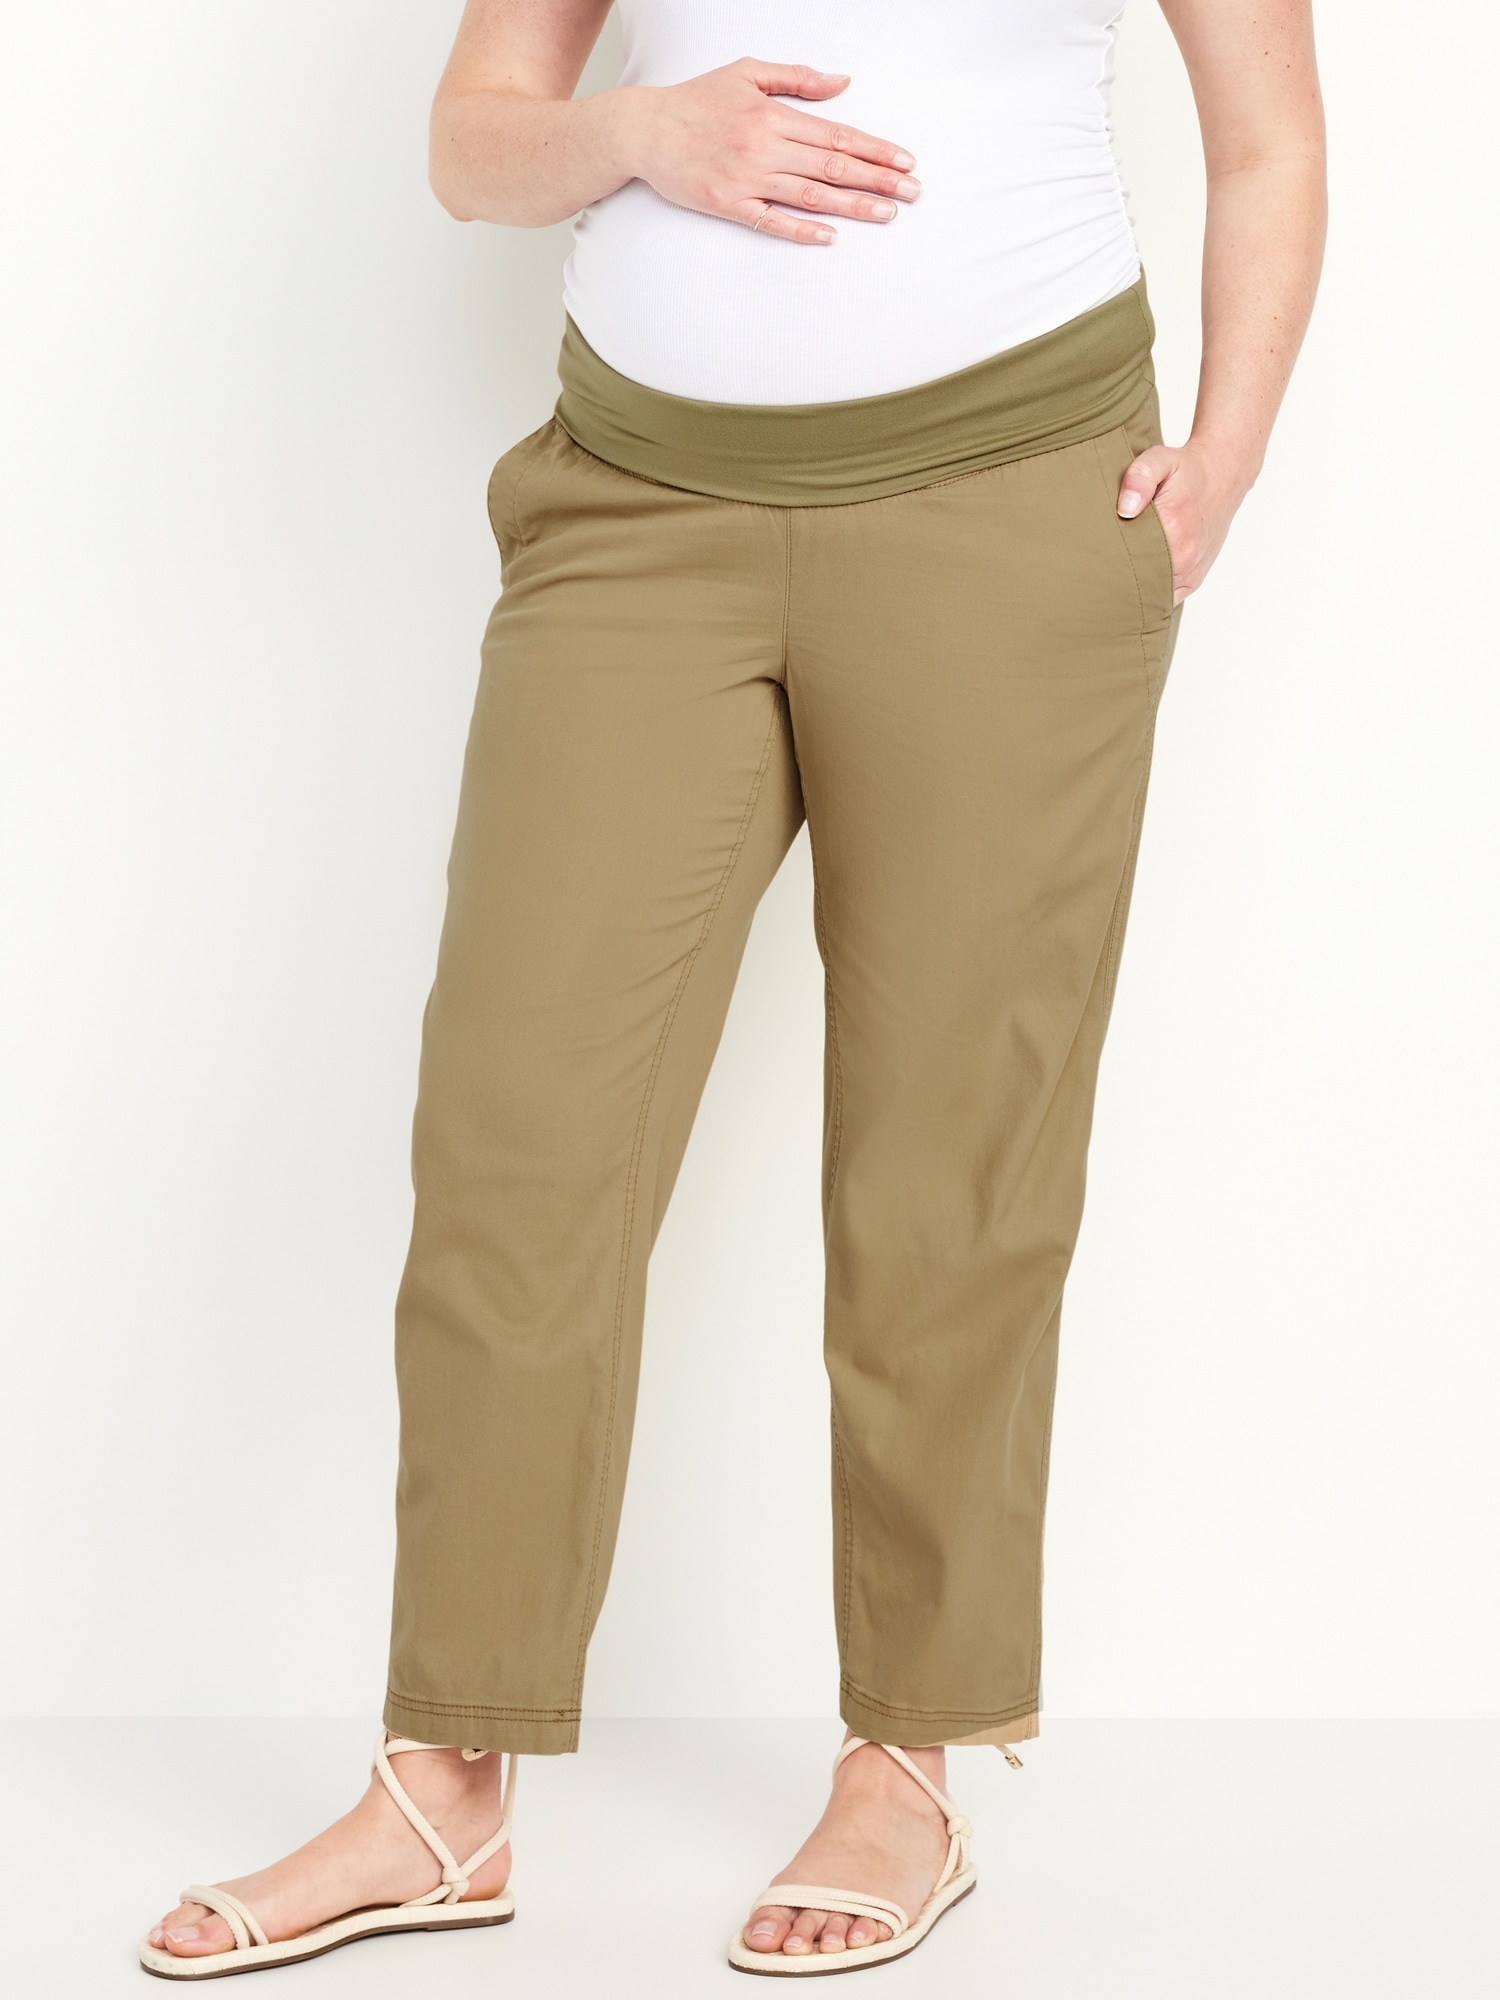 Old Navy Maternity Rollover-Waist OGC Chino Shorts -- 5-inch inseam